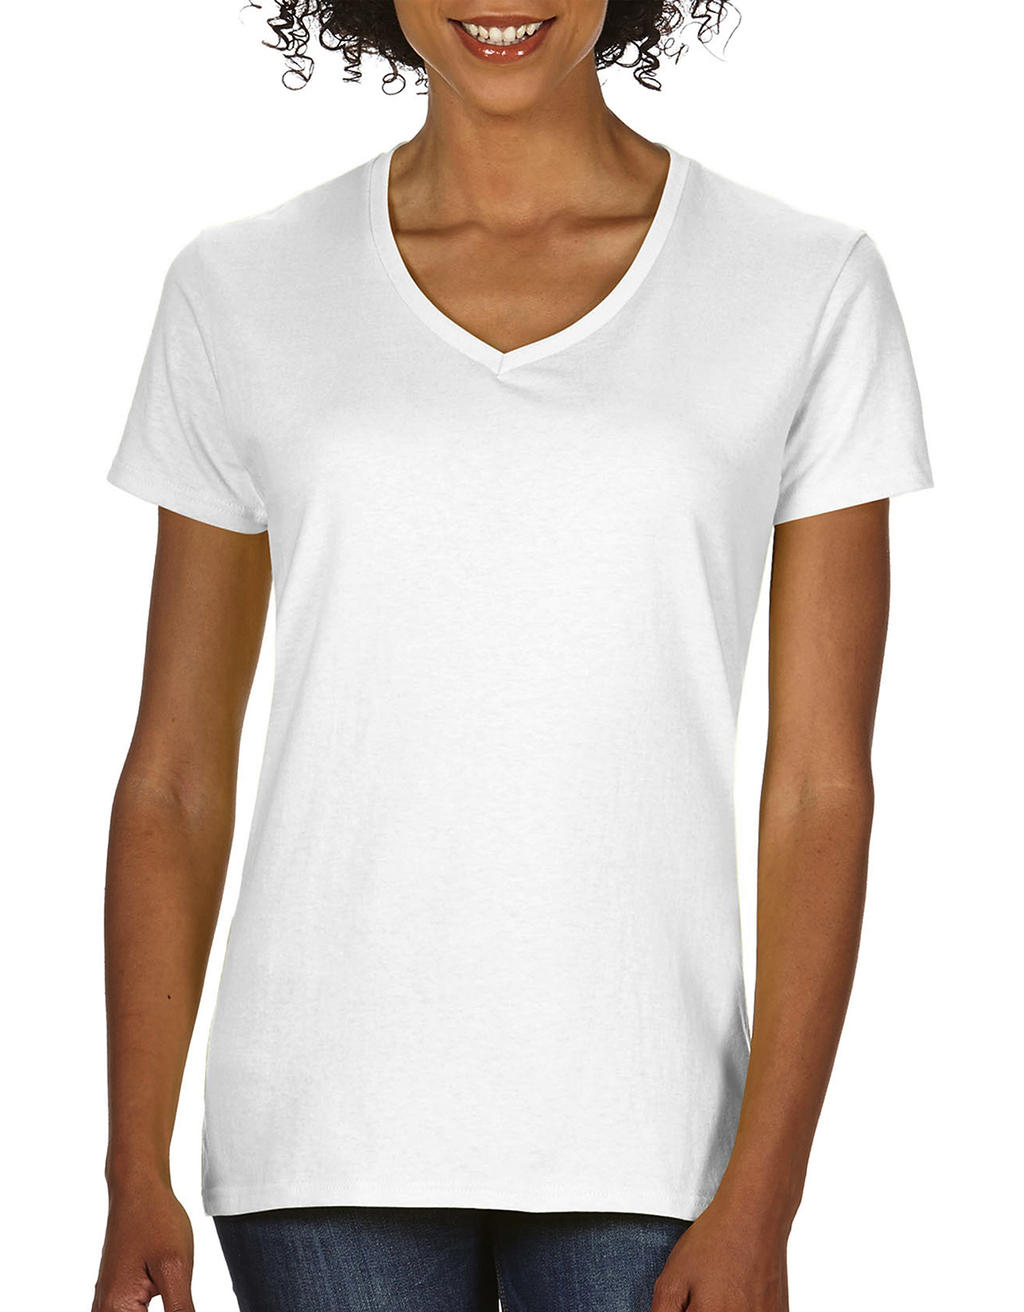 Gildan - camiseta mujer premium cuello v - 4100vl